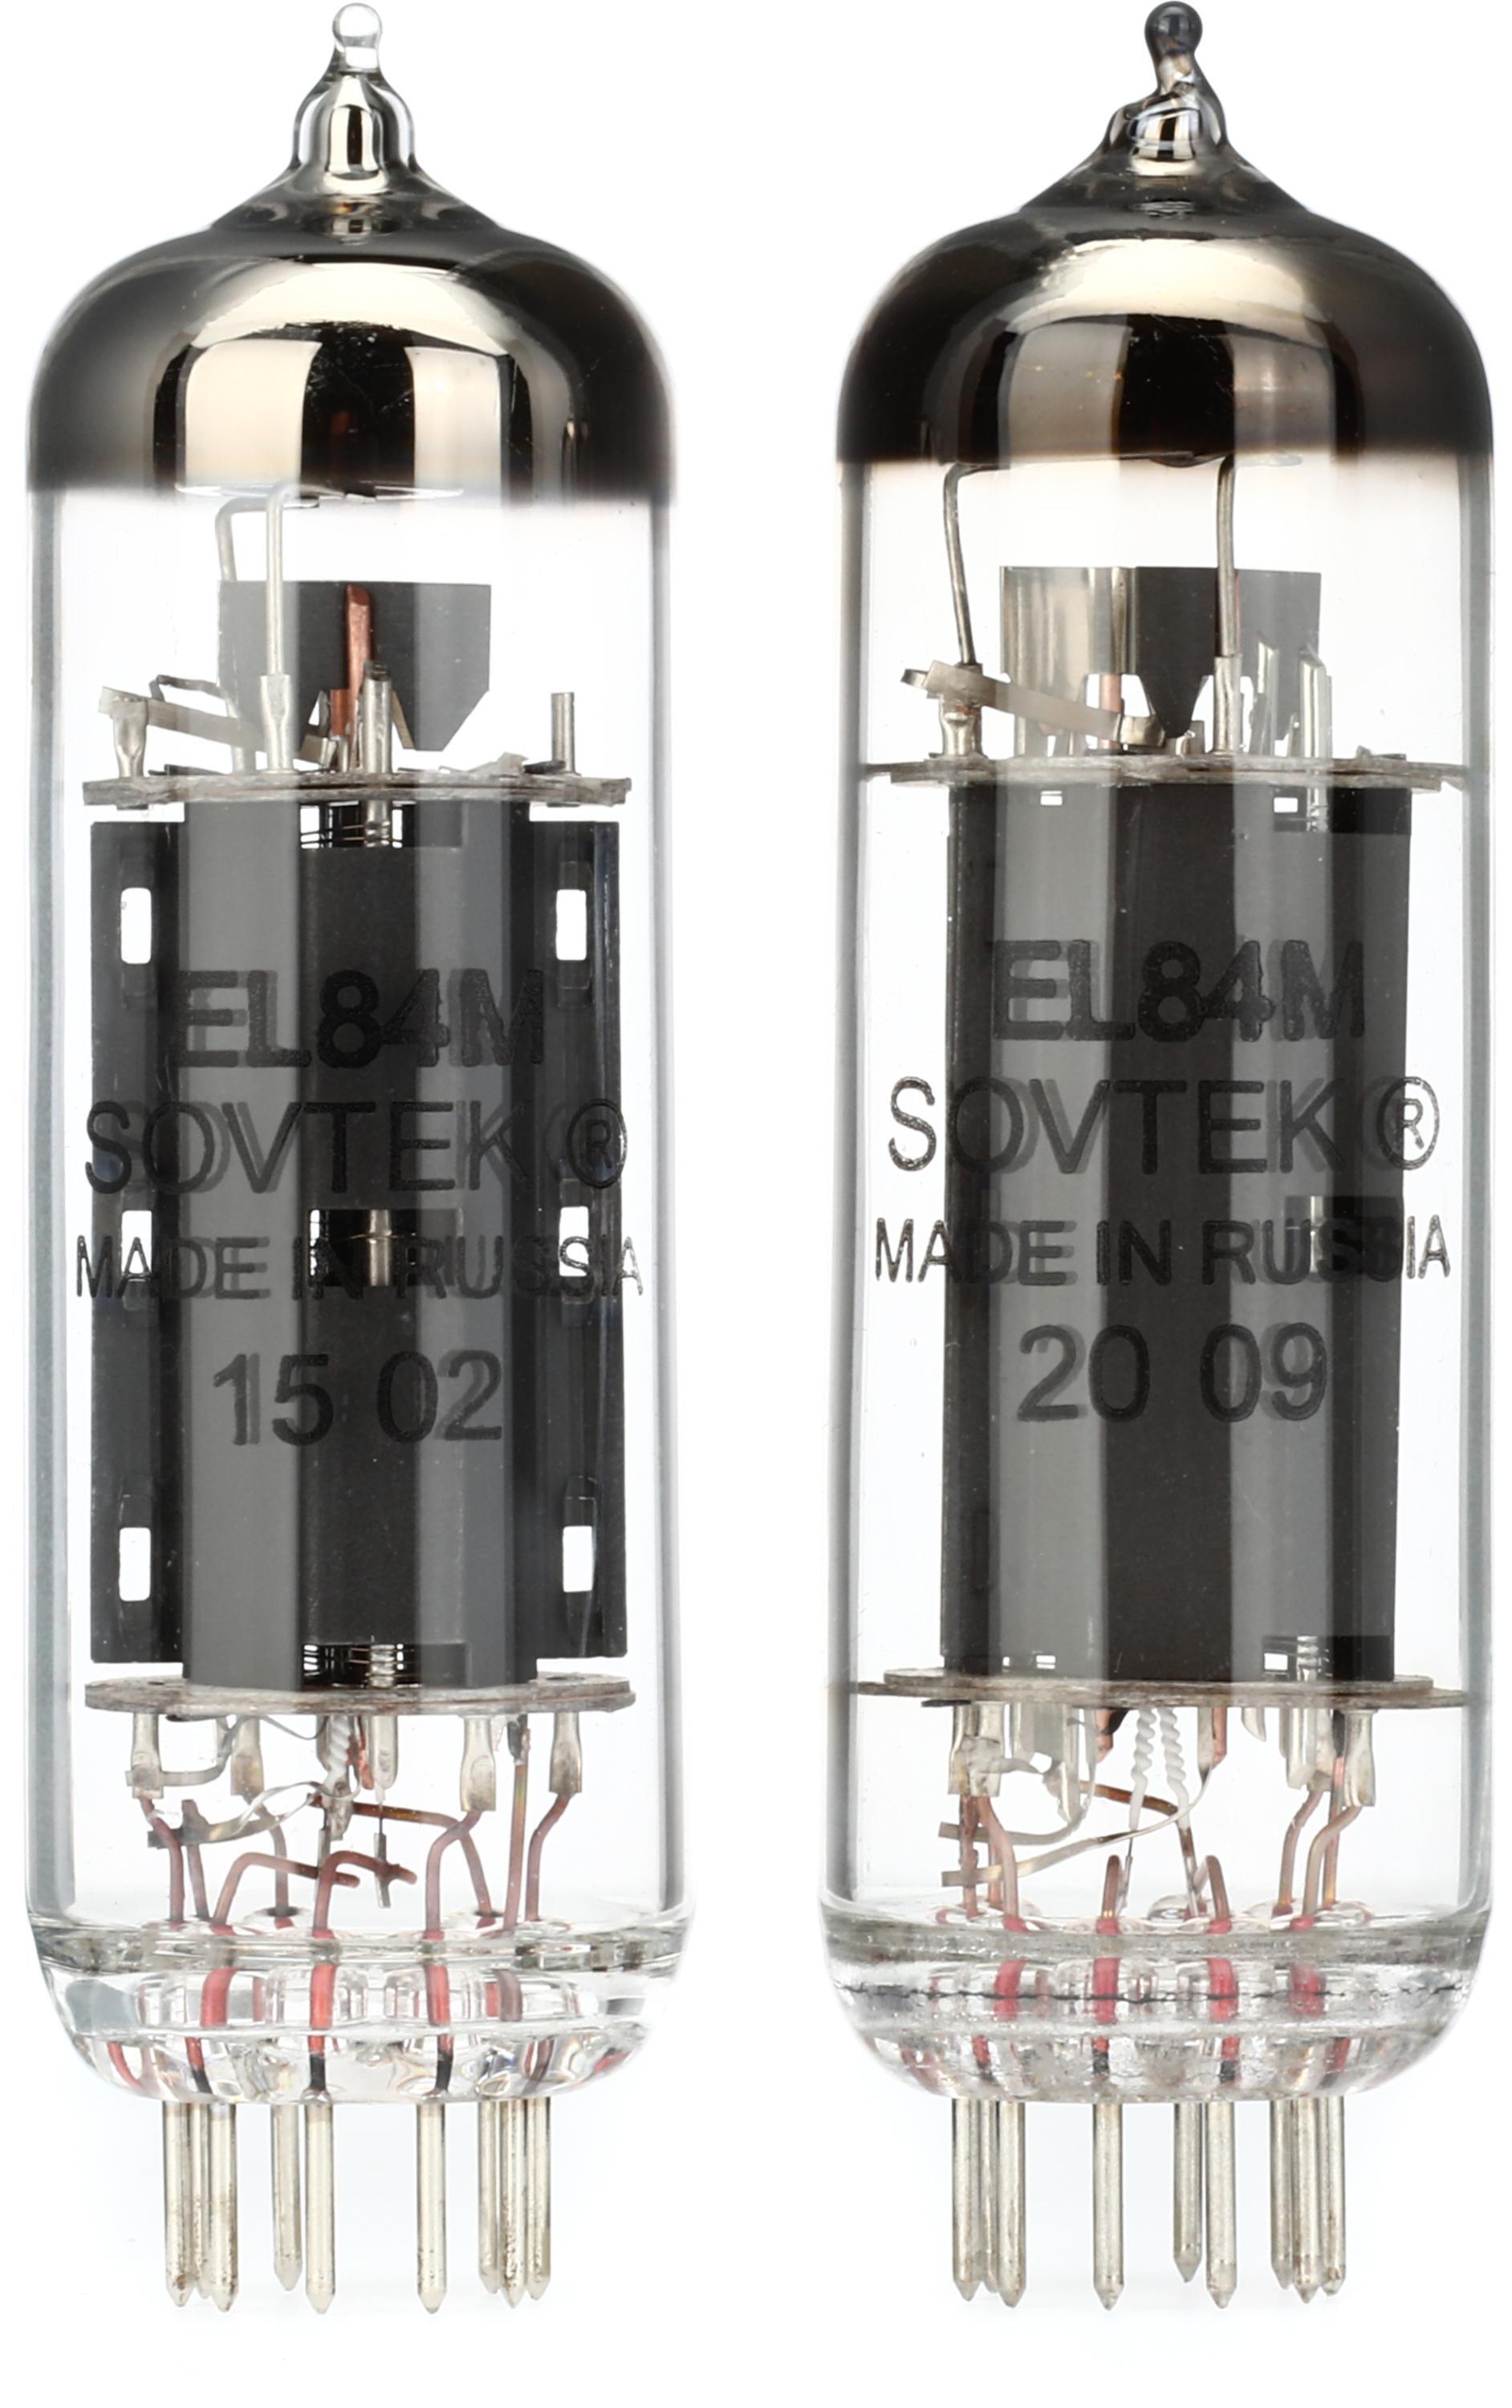 Sovtek EL84M Power Tubes - Matched Duet | Sweetwater